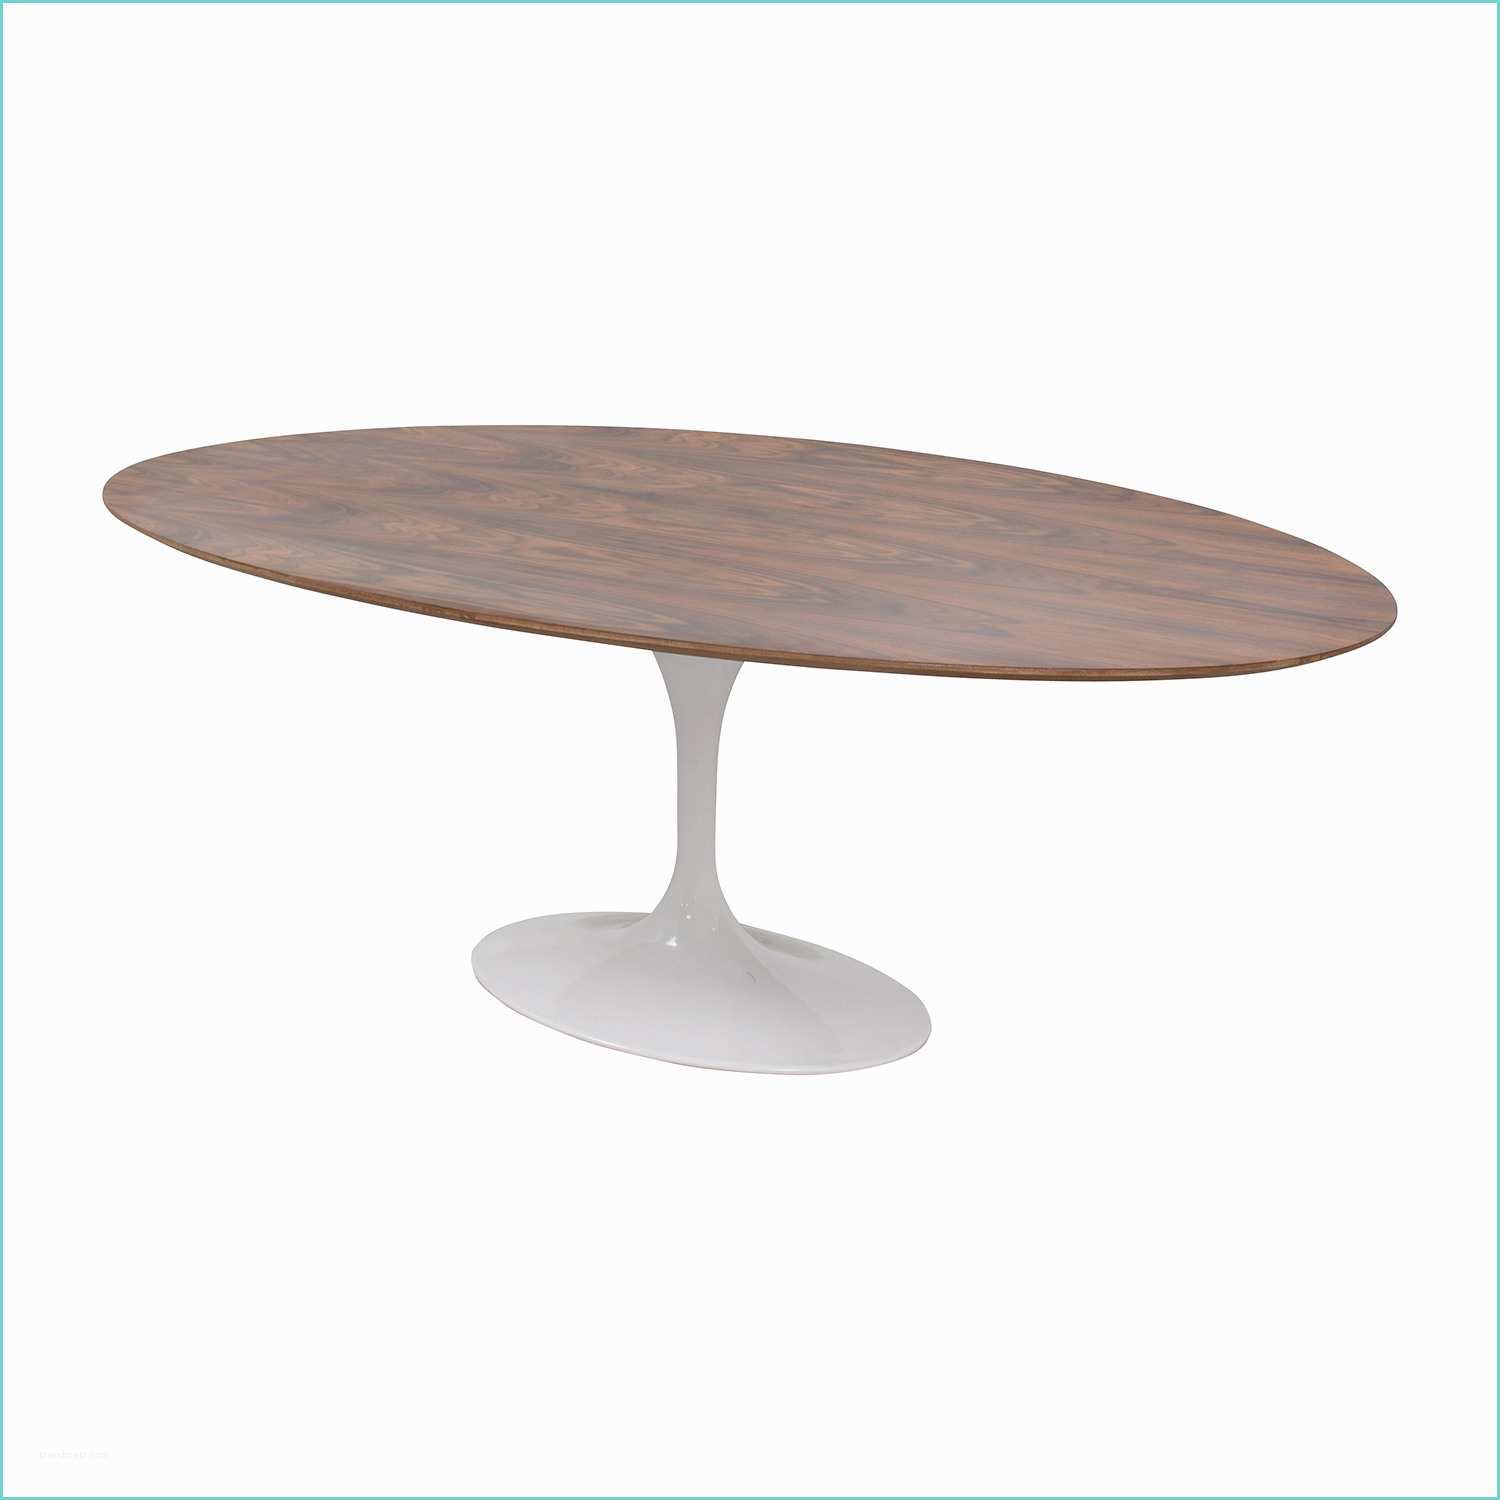 Saarinen Oval Dining Table Replica Off Inmod Inmod Saarinen Oval Pedestal Dining Table